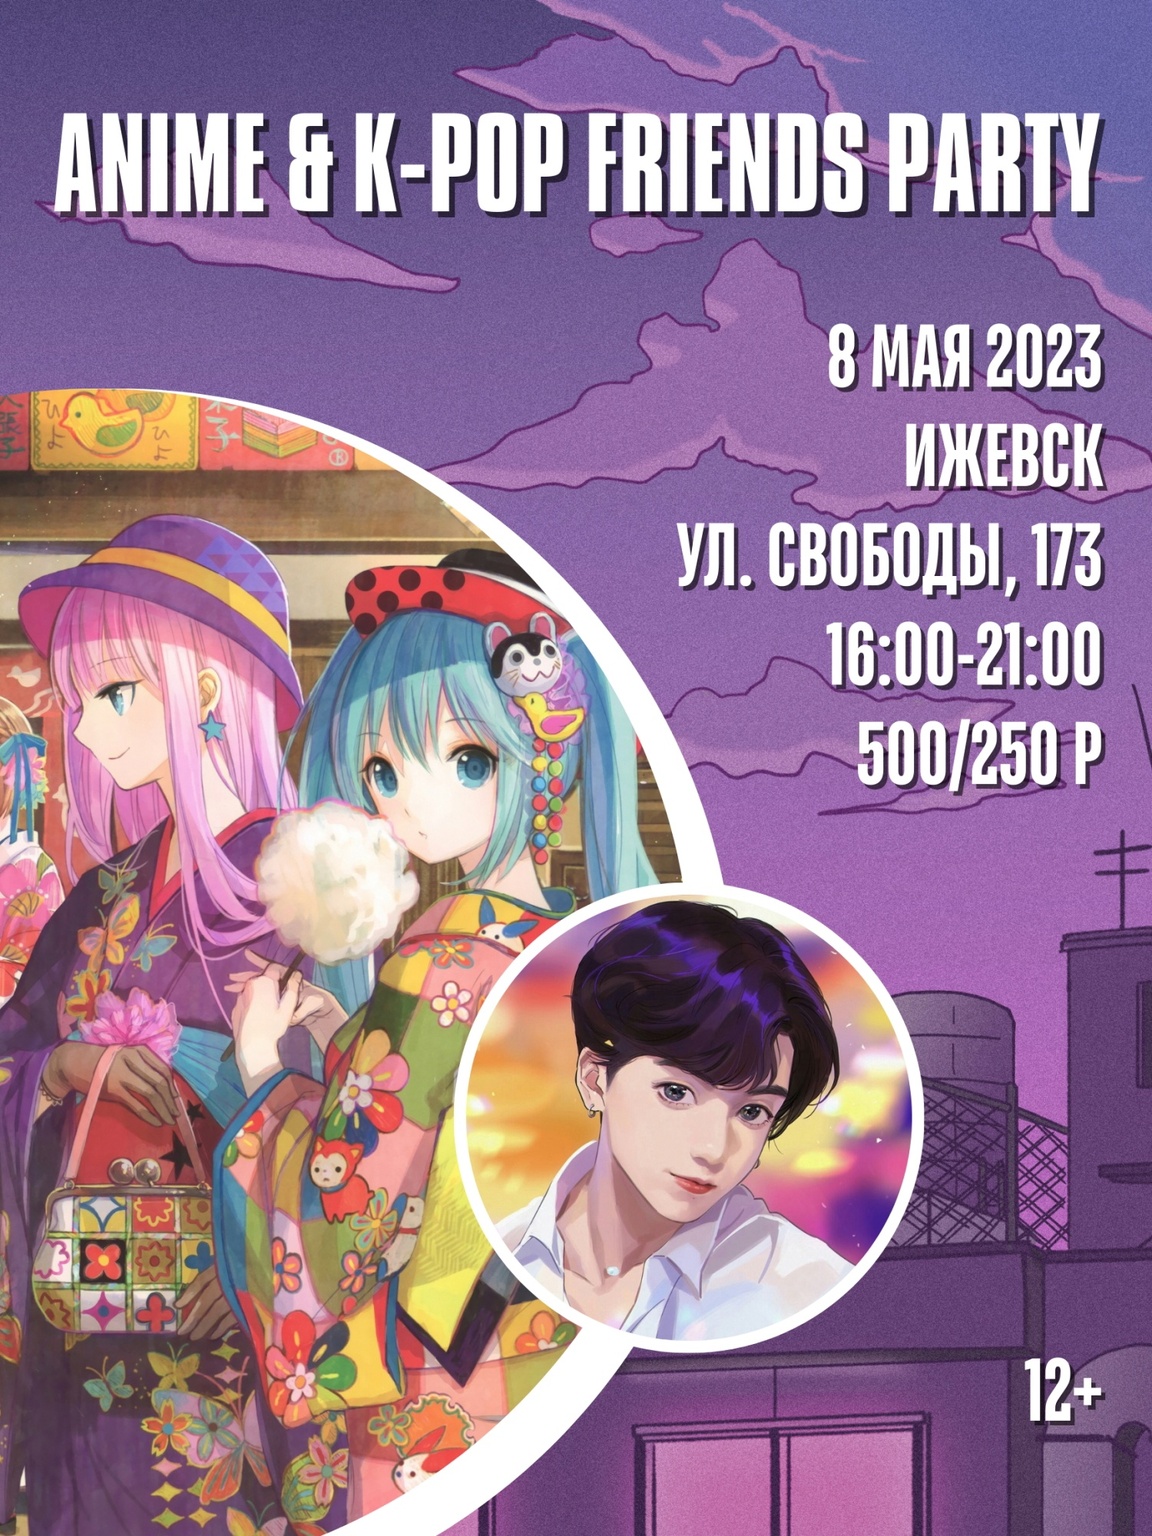 Anime & K-pop Party